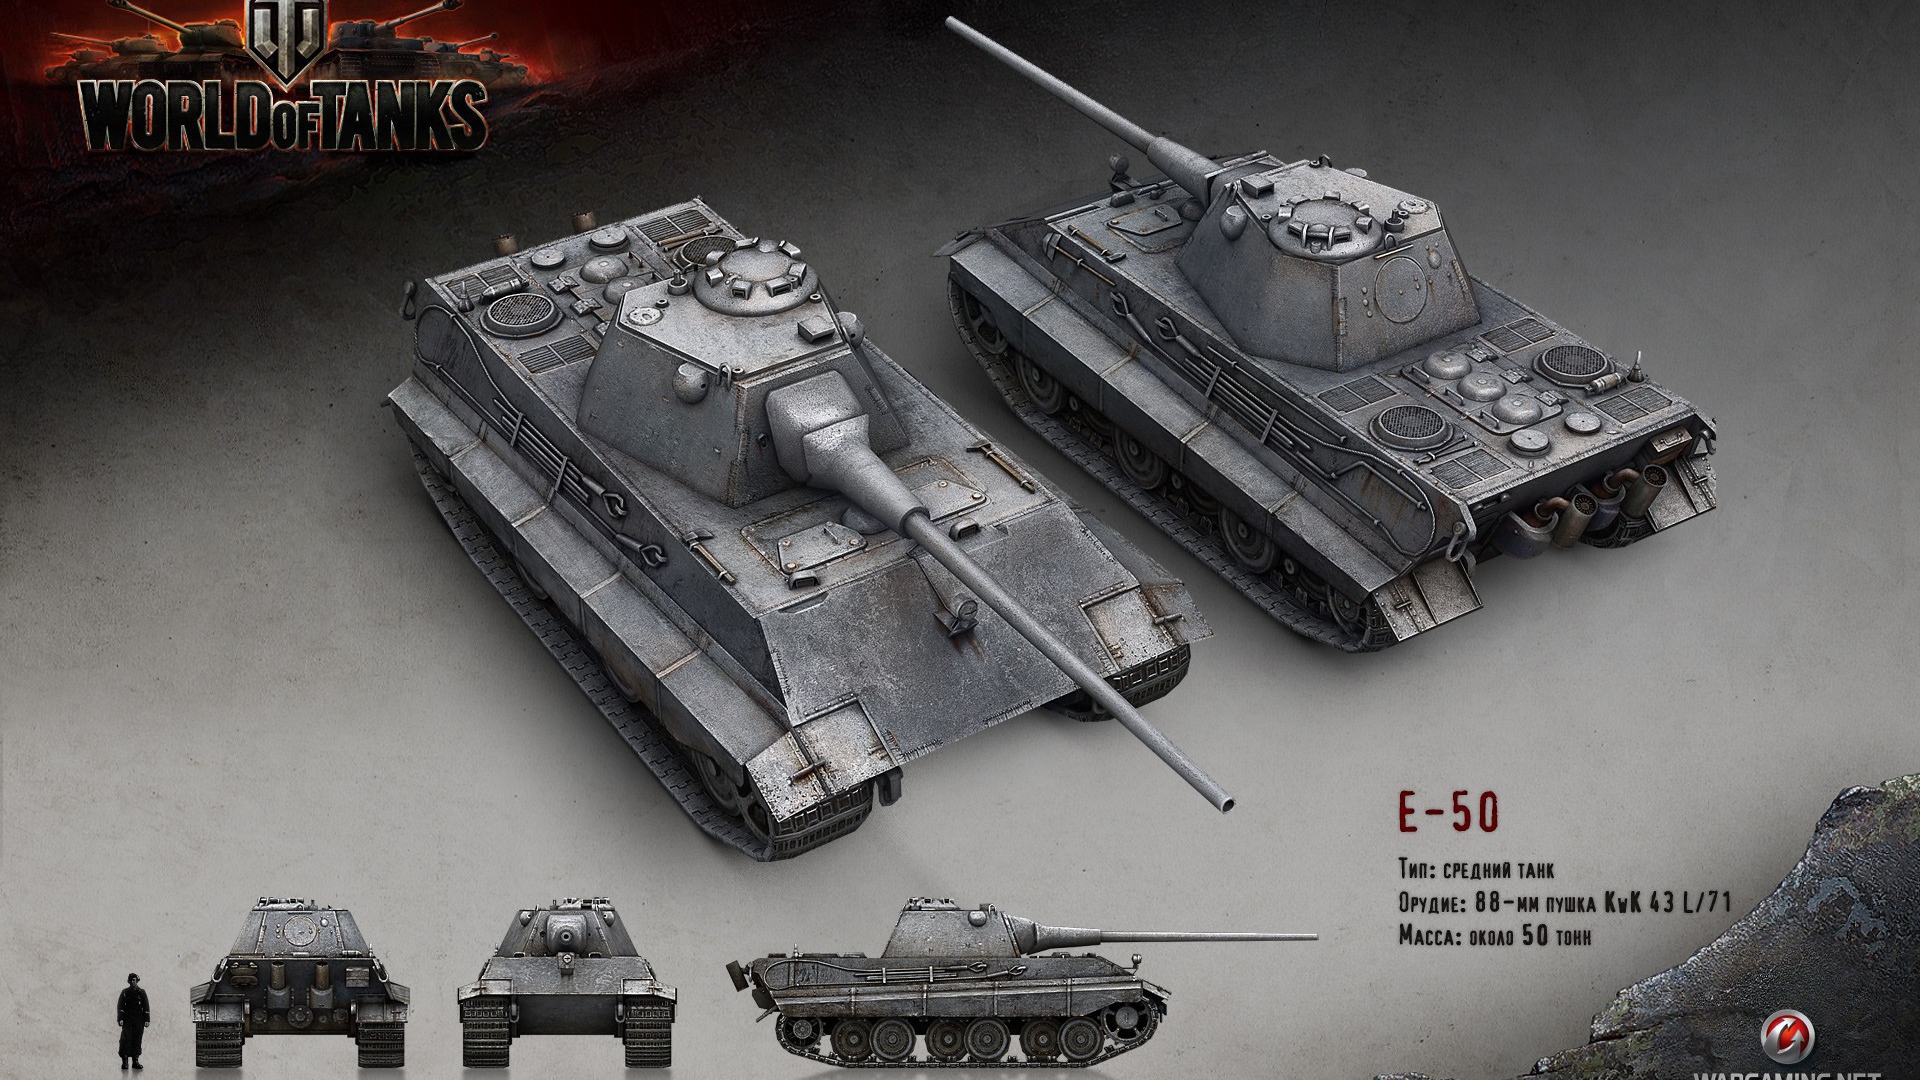 Medium Tank E-50, the game World of Tanks